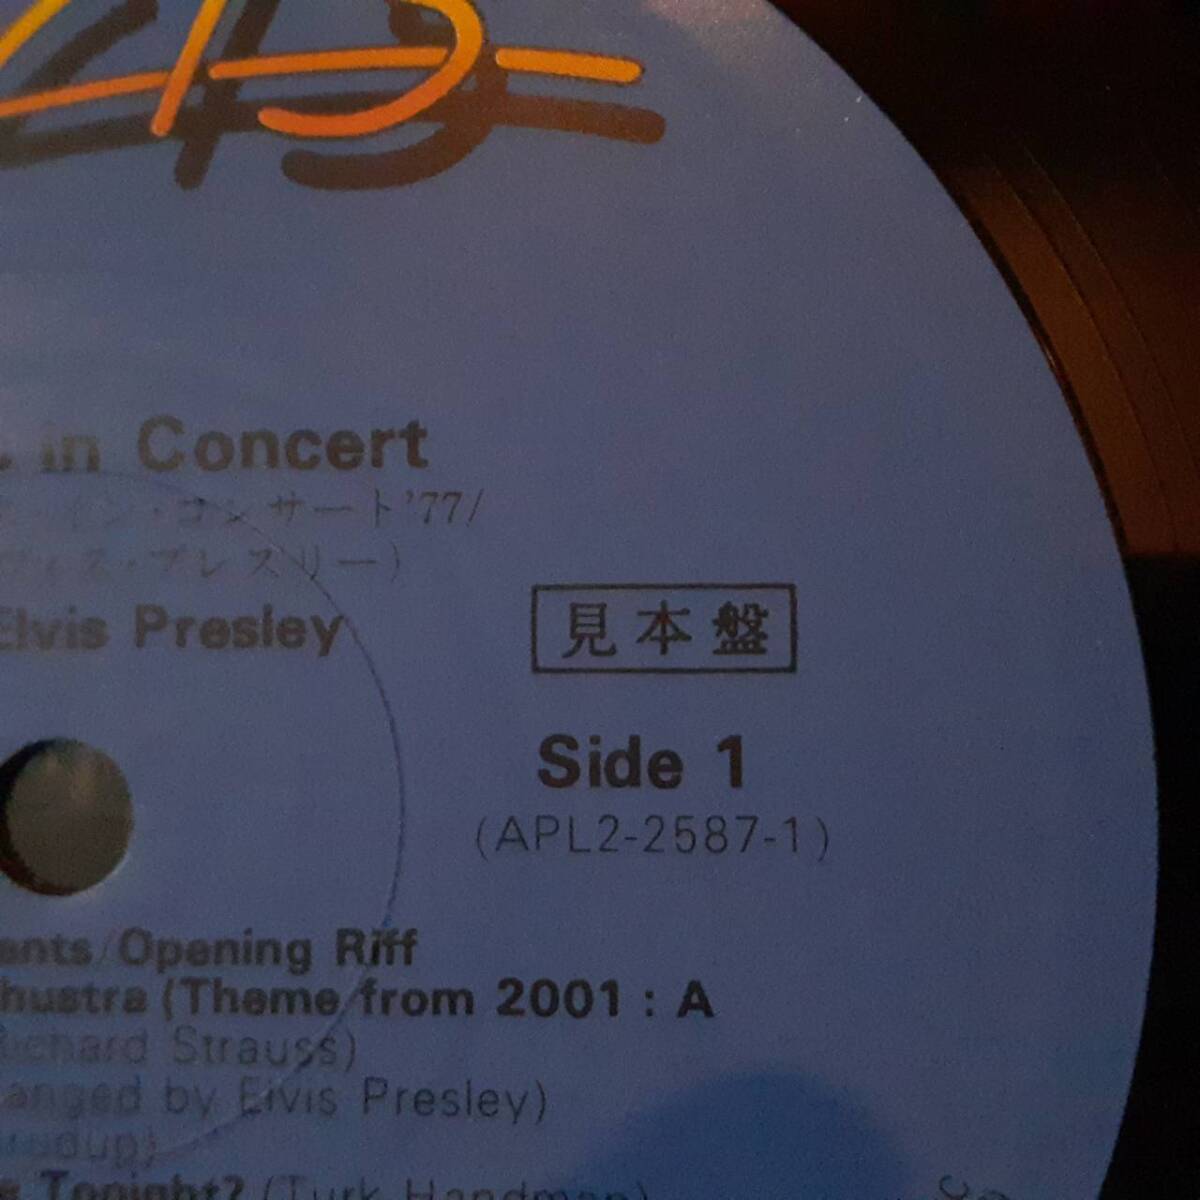 PROMO日本RCA盤2LP帯付き 見本盤 Elvis Presley / Elvis In Concert '77 1977年 RCA-9139~40 エルヴィス・プレスリー イン・コンサート'77_画像1